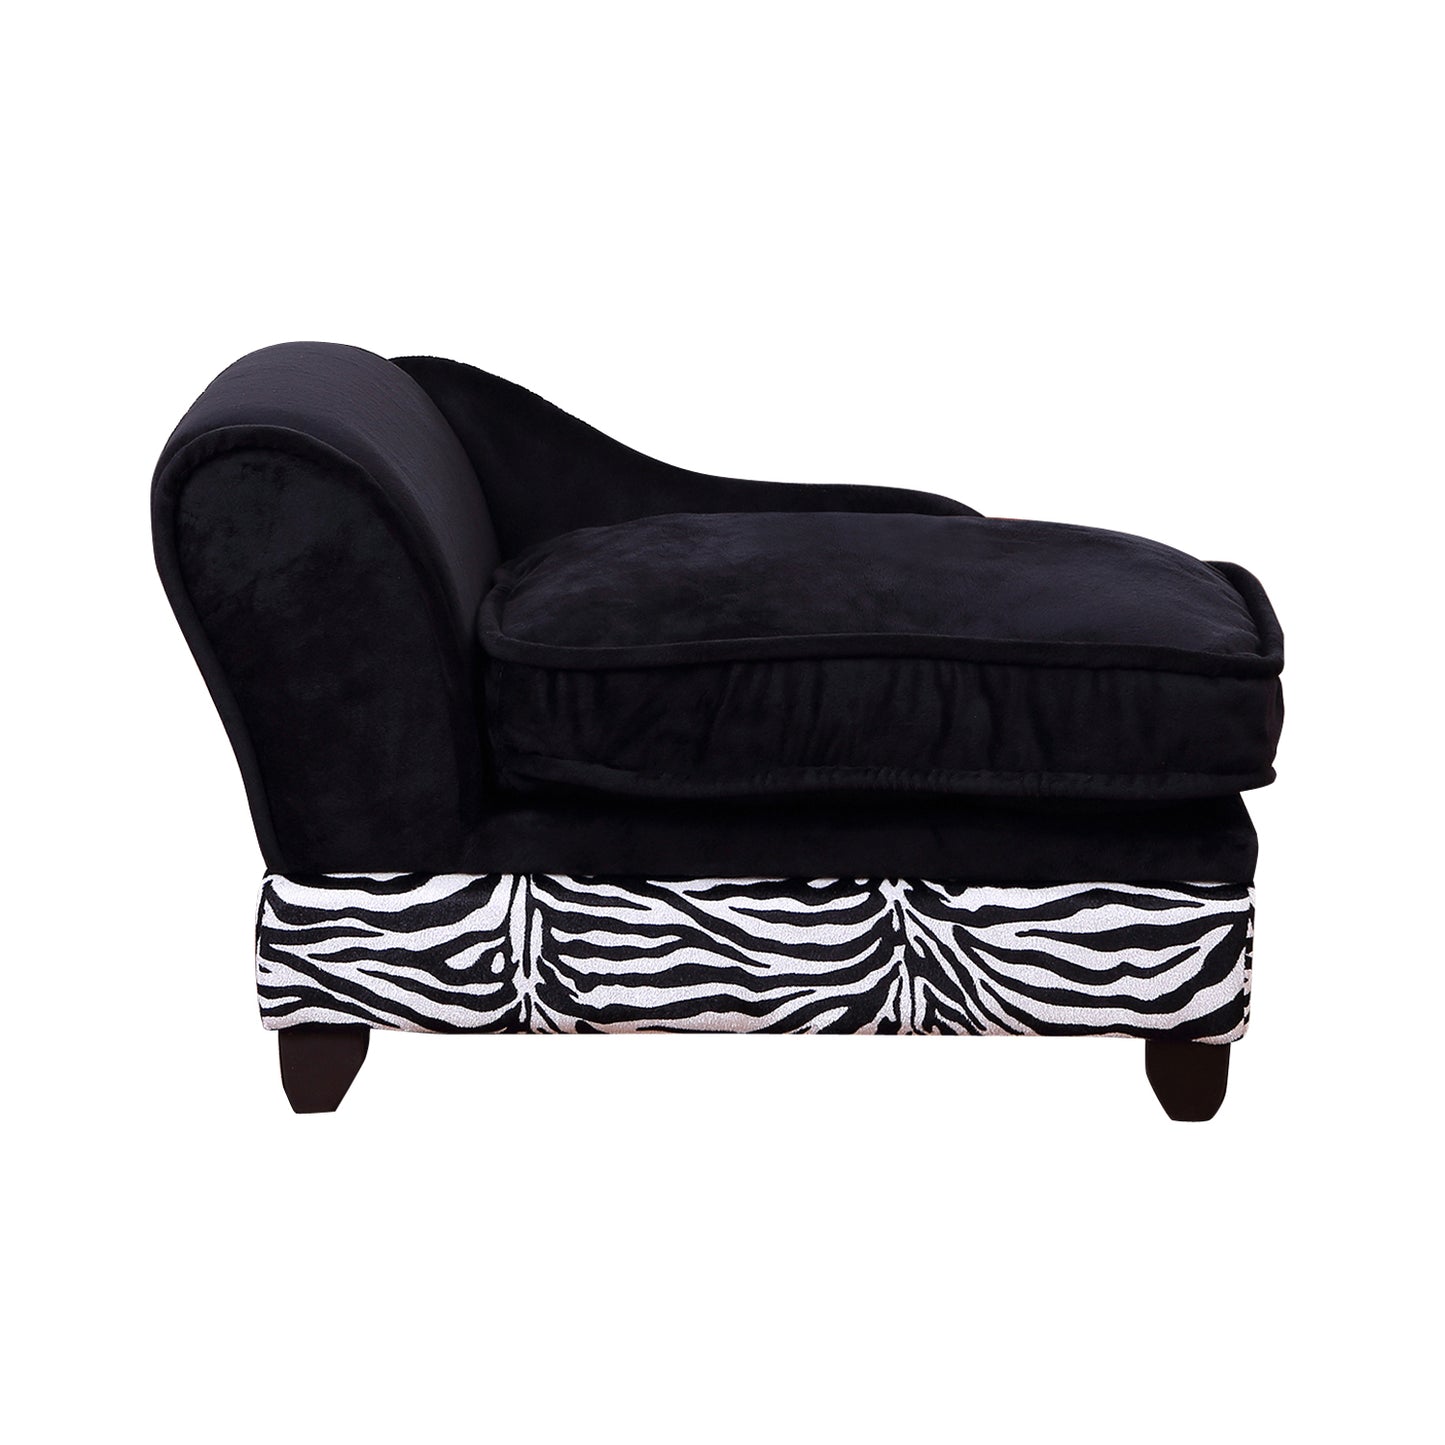 Pawhut Fabric Pet Sofa, 57x34x36 cm-Black, Zebra-Stripe